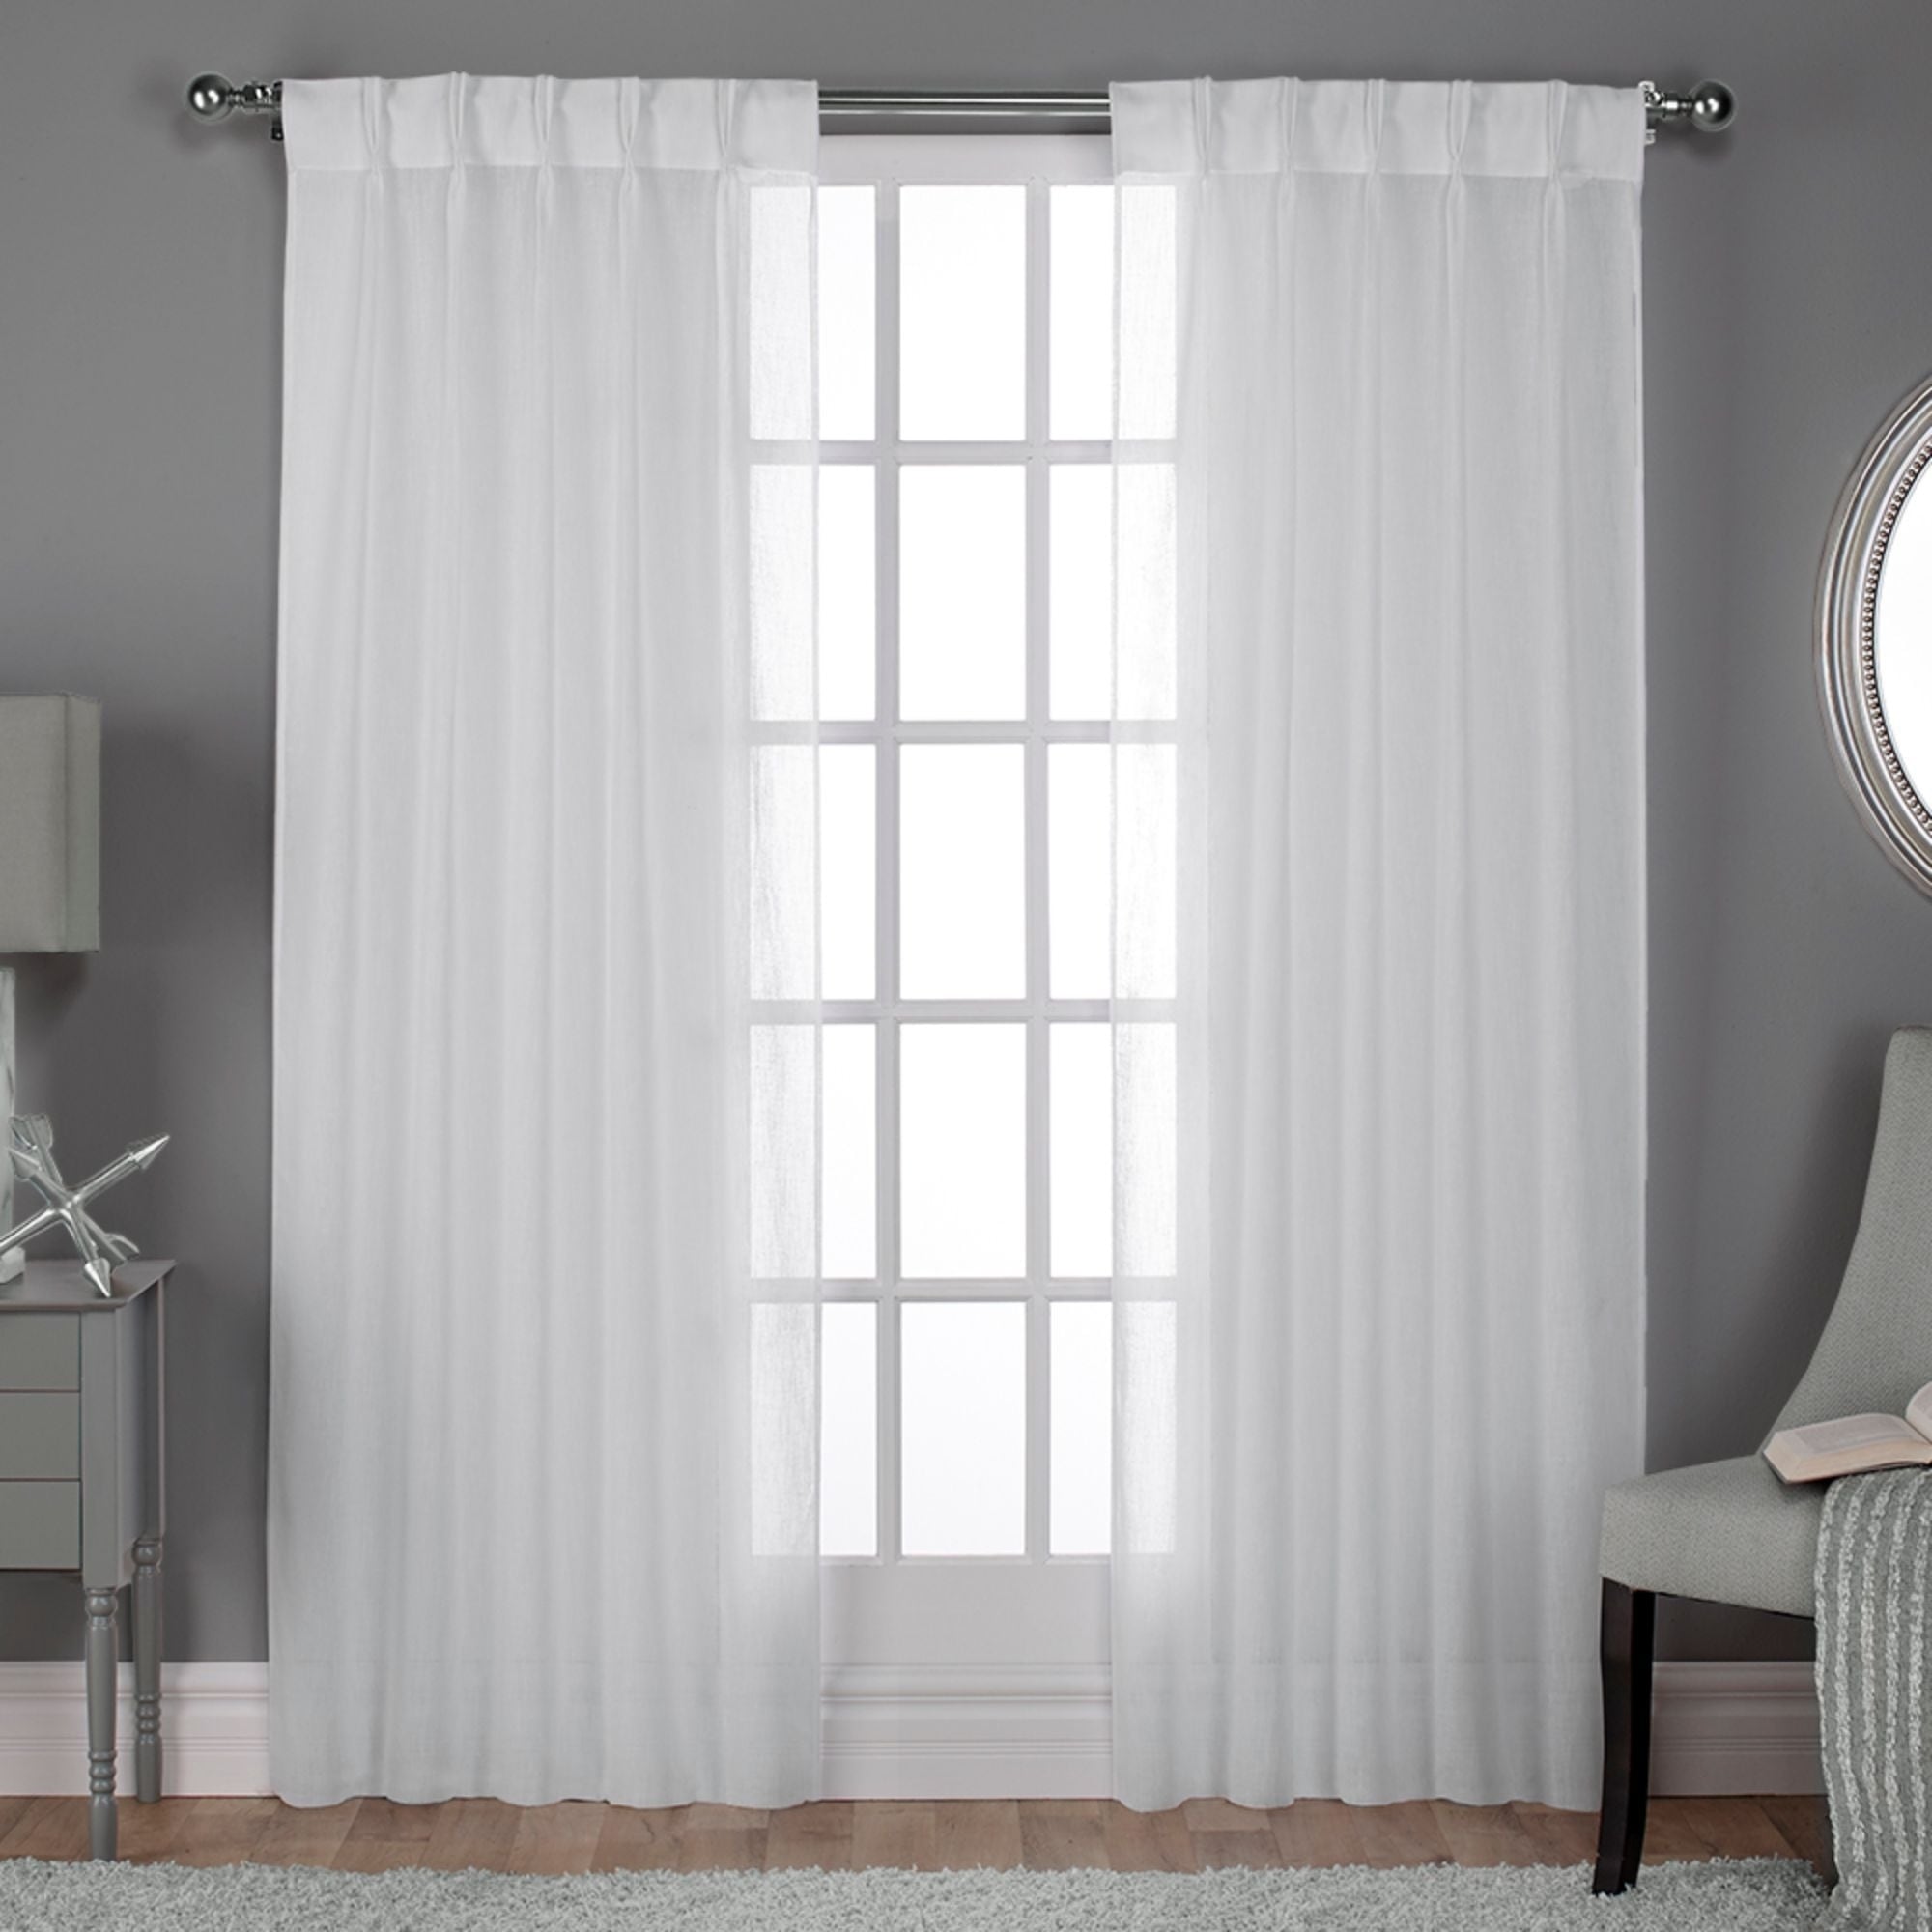 ChezMax Solid Rod Pocket Window Treatment Terylene Drape Panel Voile Sheer Curtain 55 W x 94 L White 1 Panel CM-TH-36889462182-baise-1.4x2.4